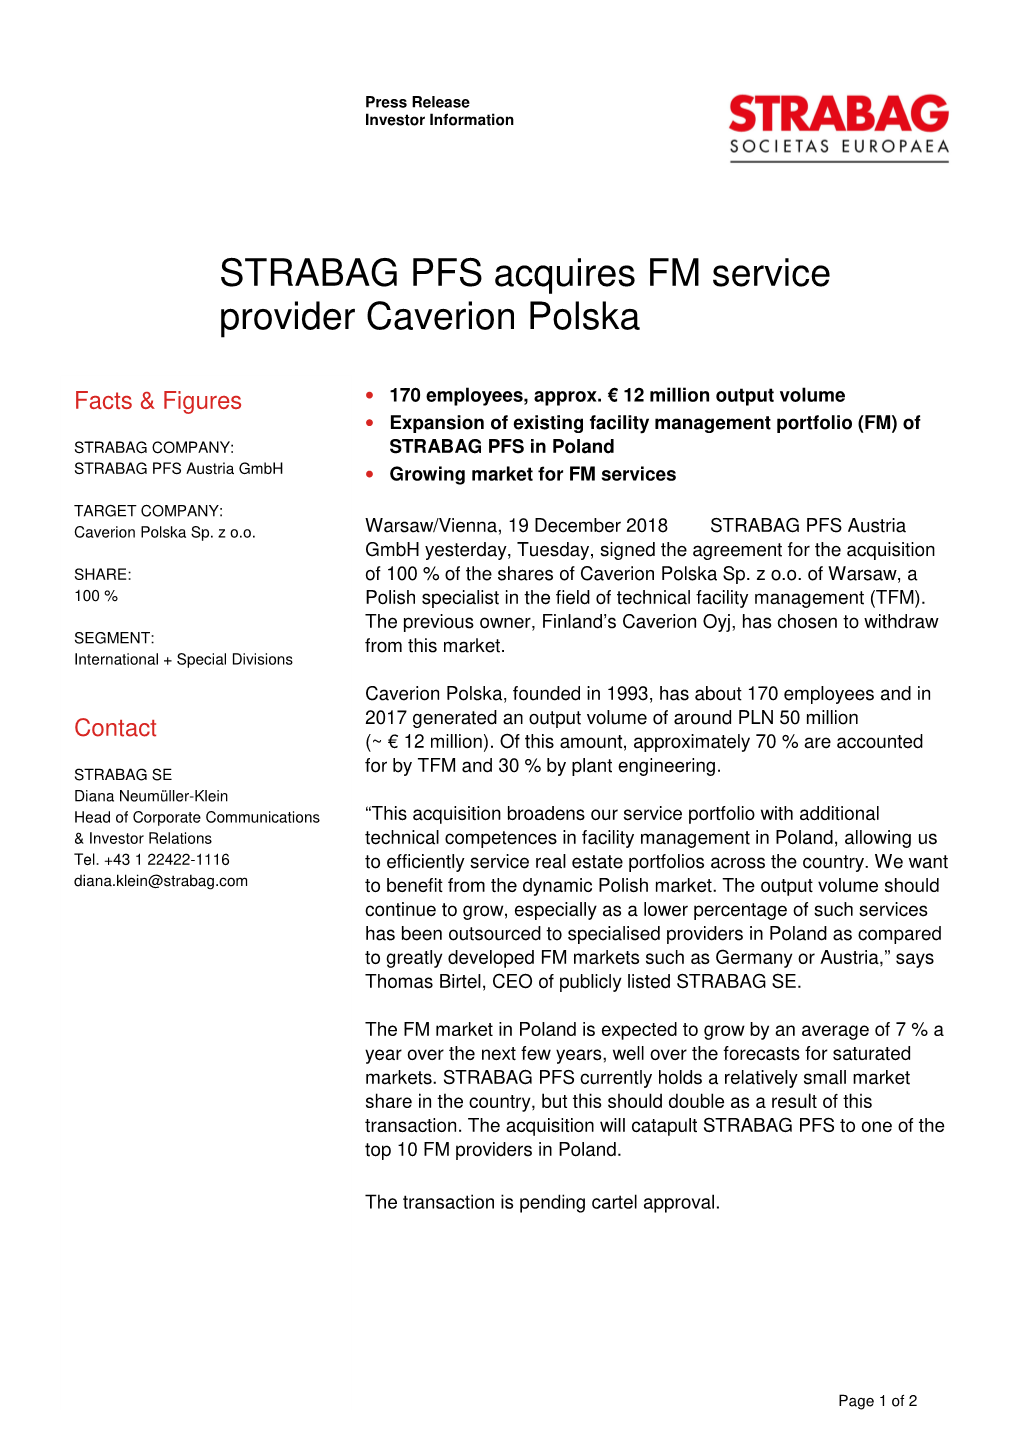 STRABAG PFS Acquires FM Service Provider Caverion Polska